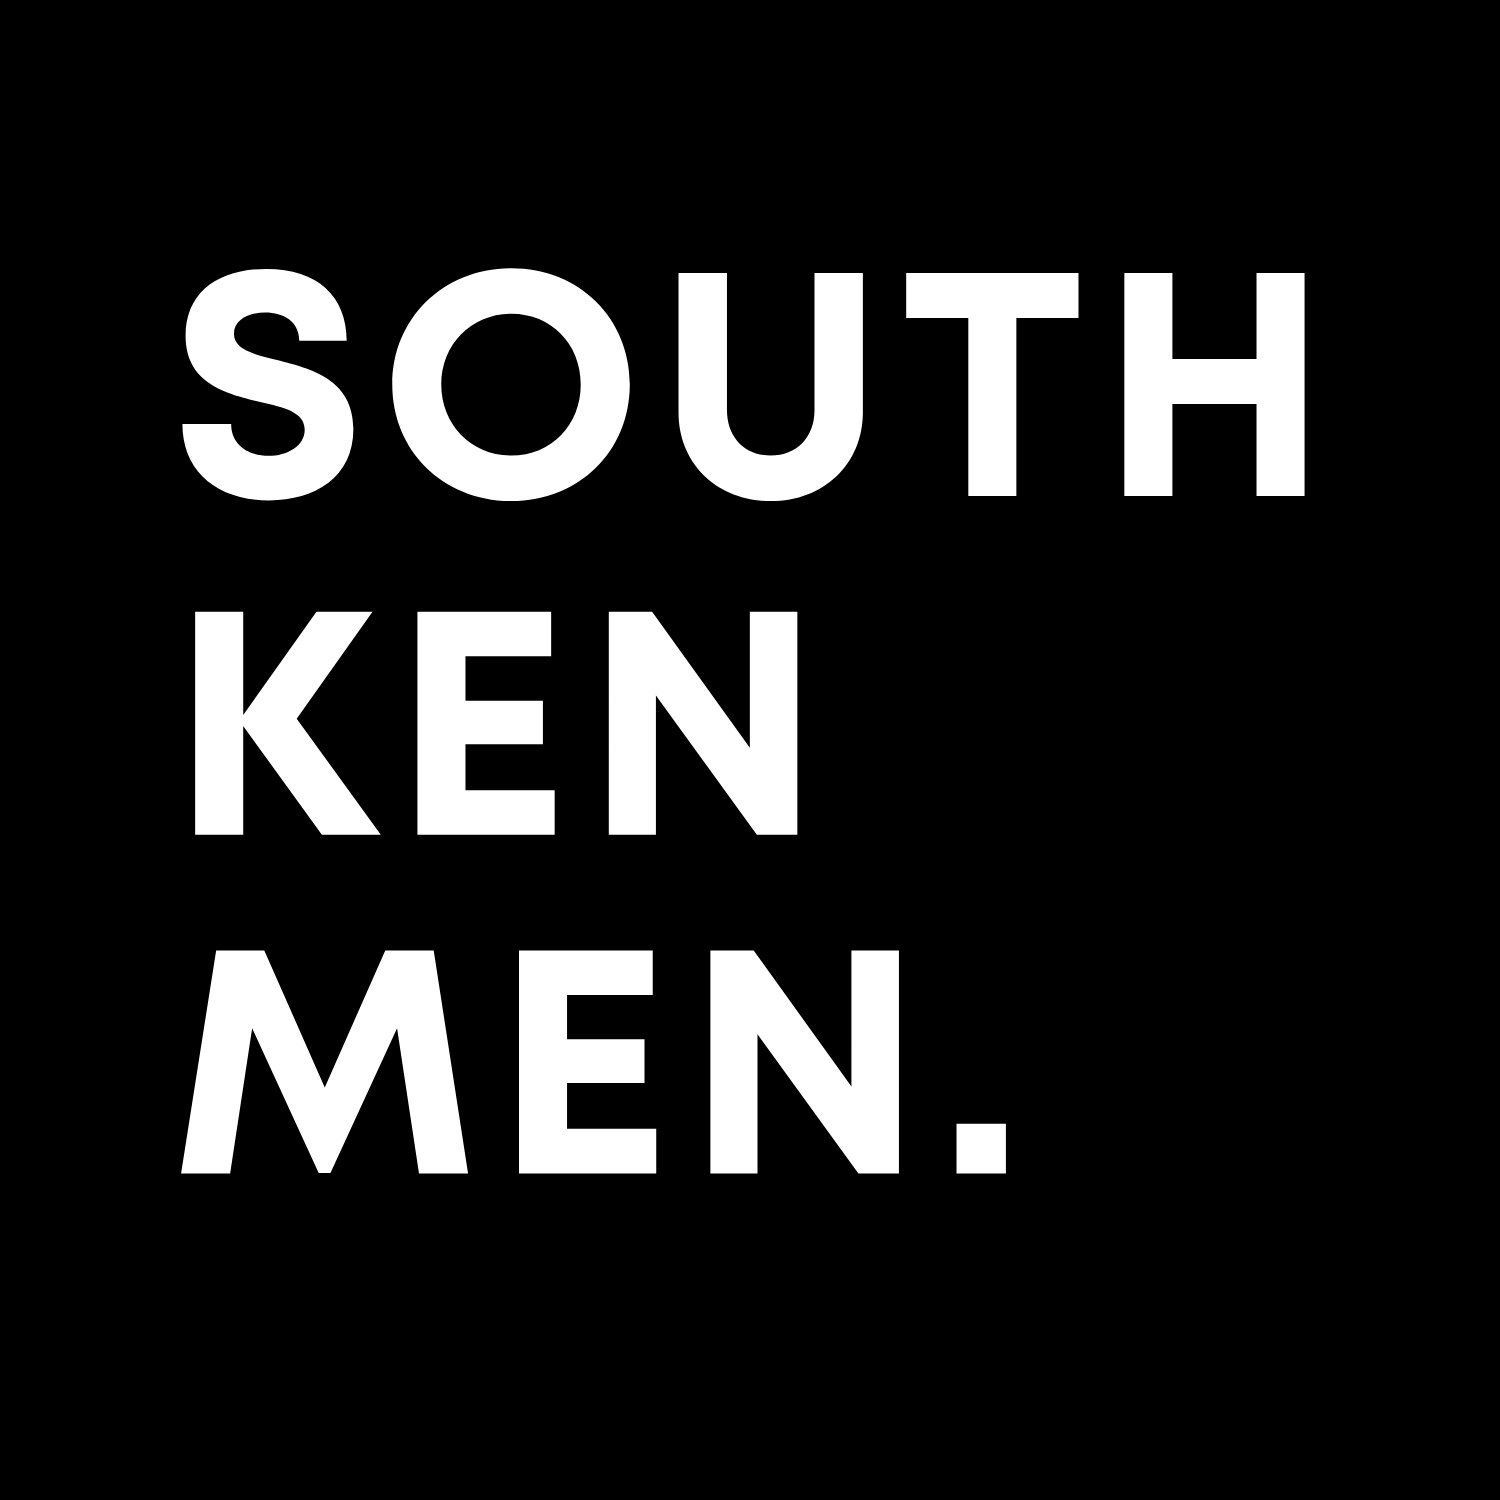 South Ken Men